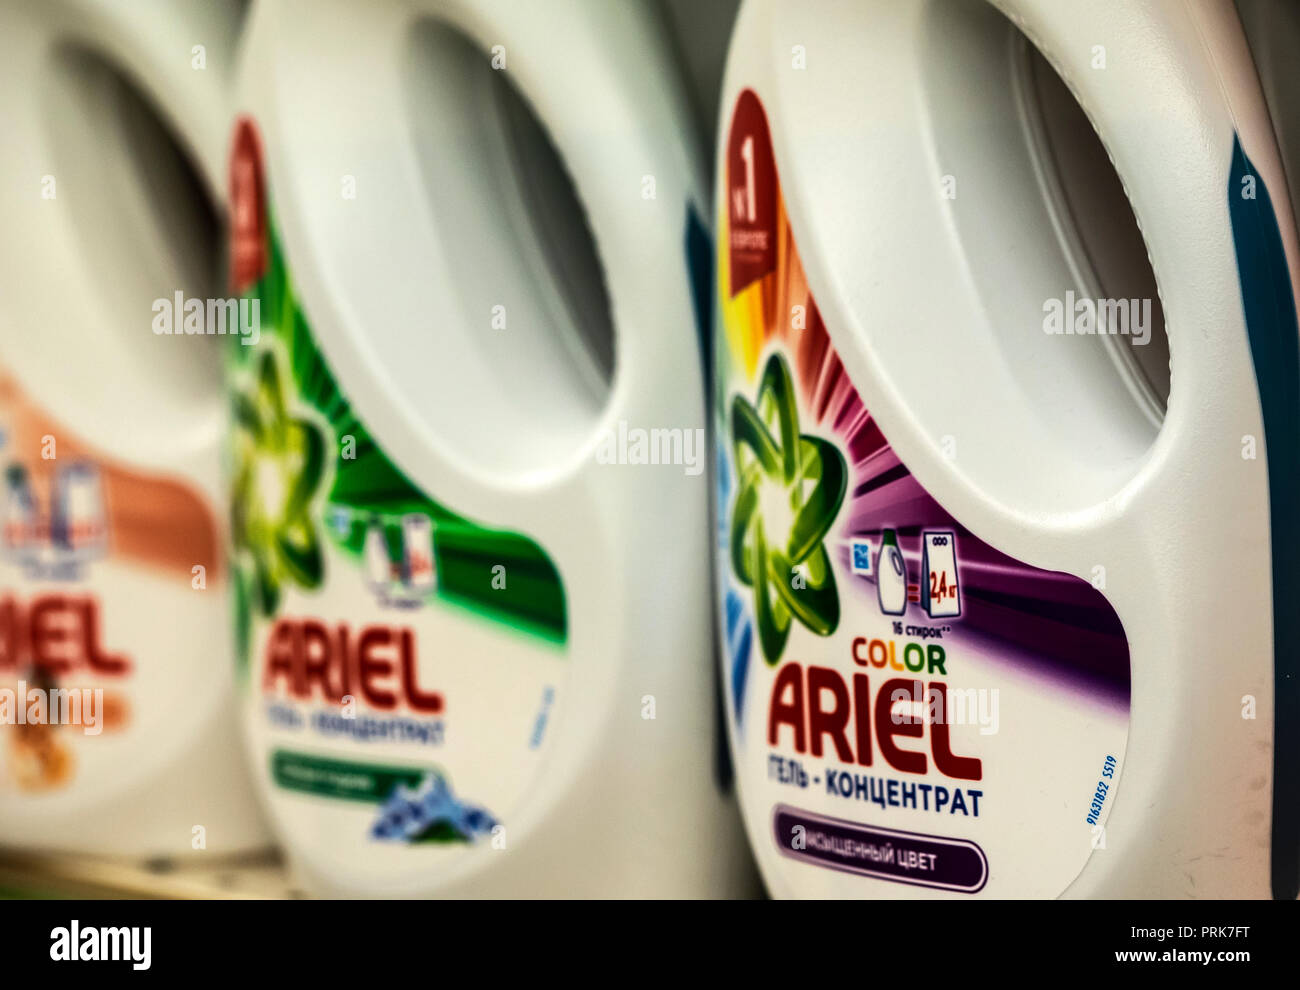 Ariel Actilift - Detergente líquido para ropa (paquete de 2)